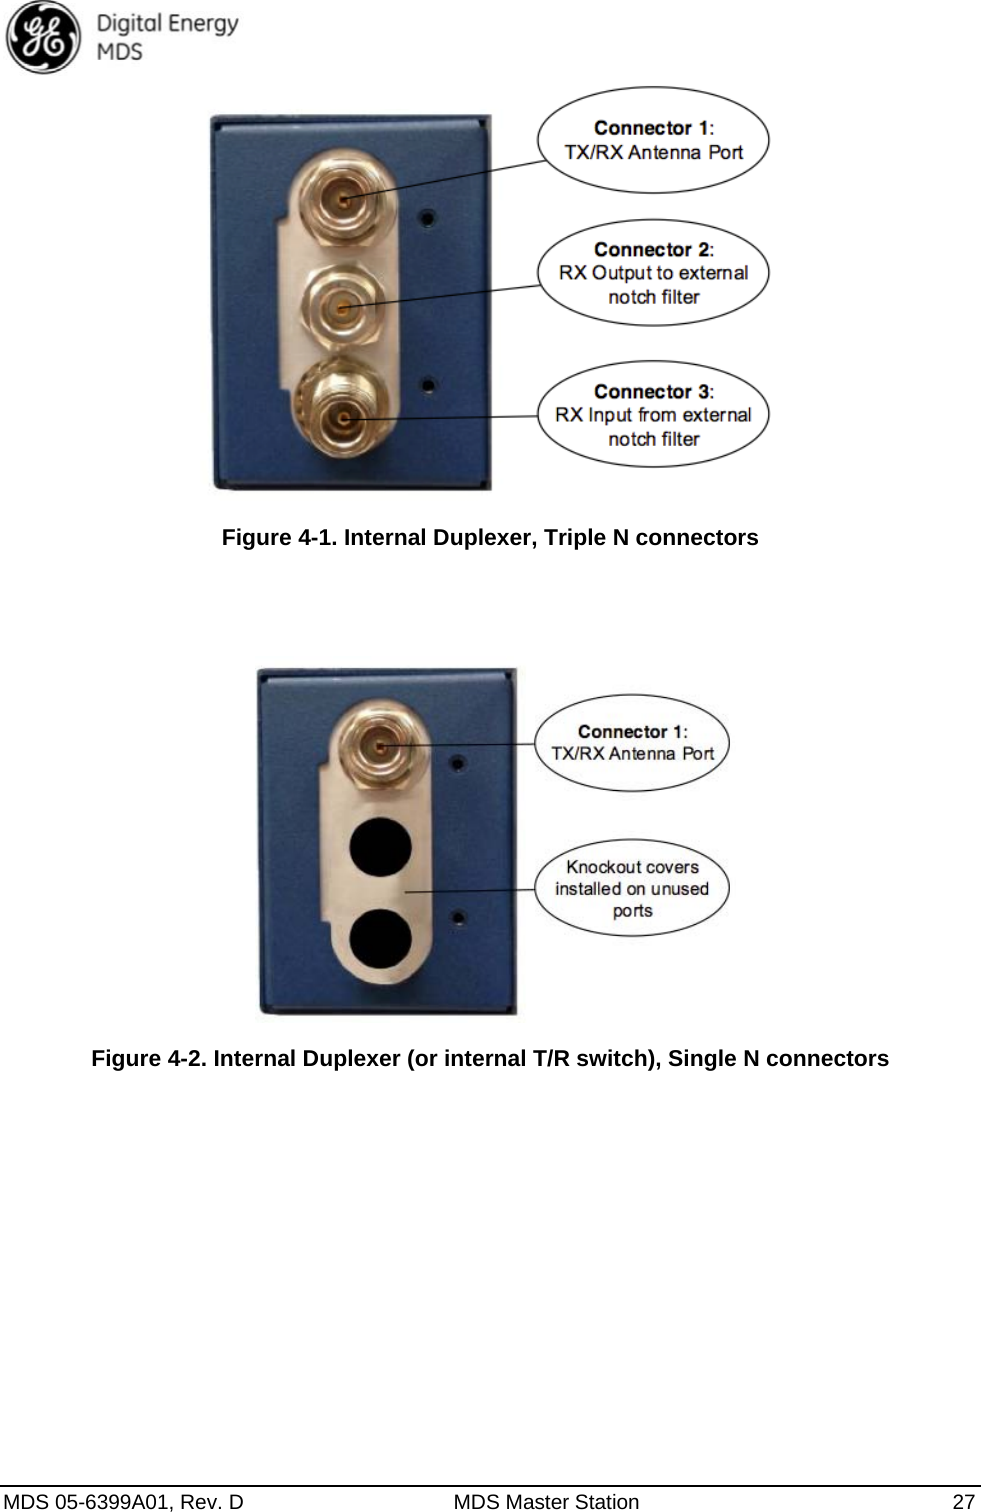  MDS 05-6399A01, Rev. D  MDS Master Station  27  Figure 4-1. Internal Duplexer, Triple N connectors     Figure 4-2. Internal Duplexer (or internal T/R switch), Single N connectors 